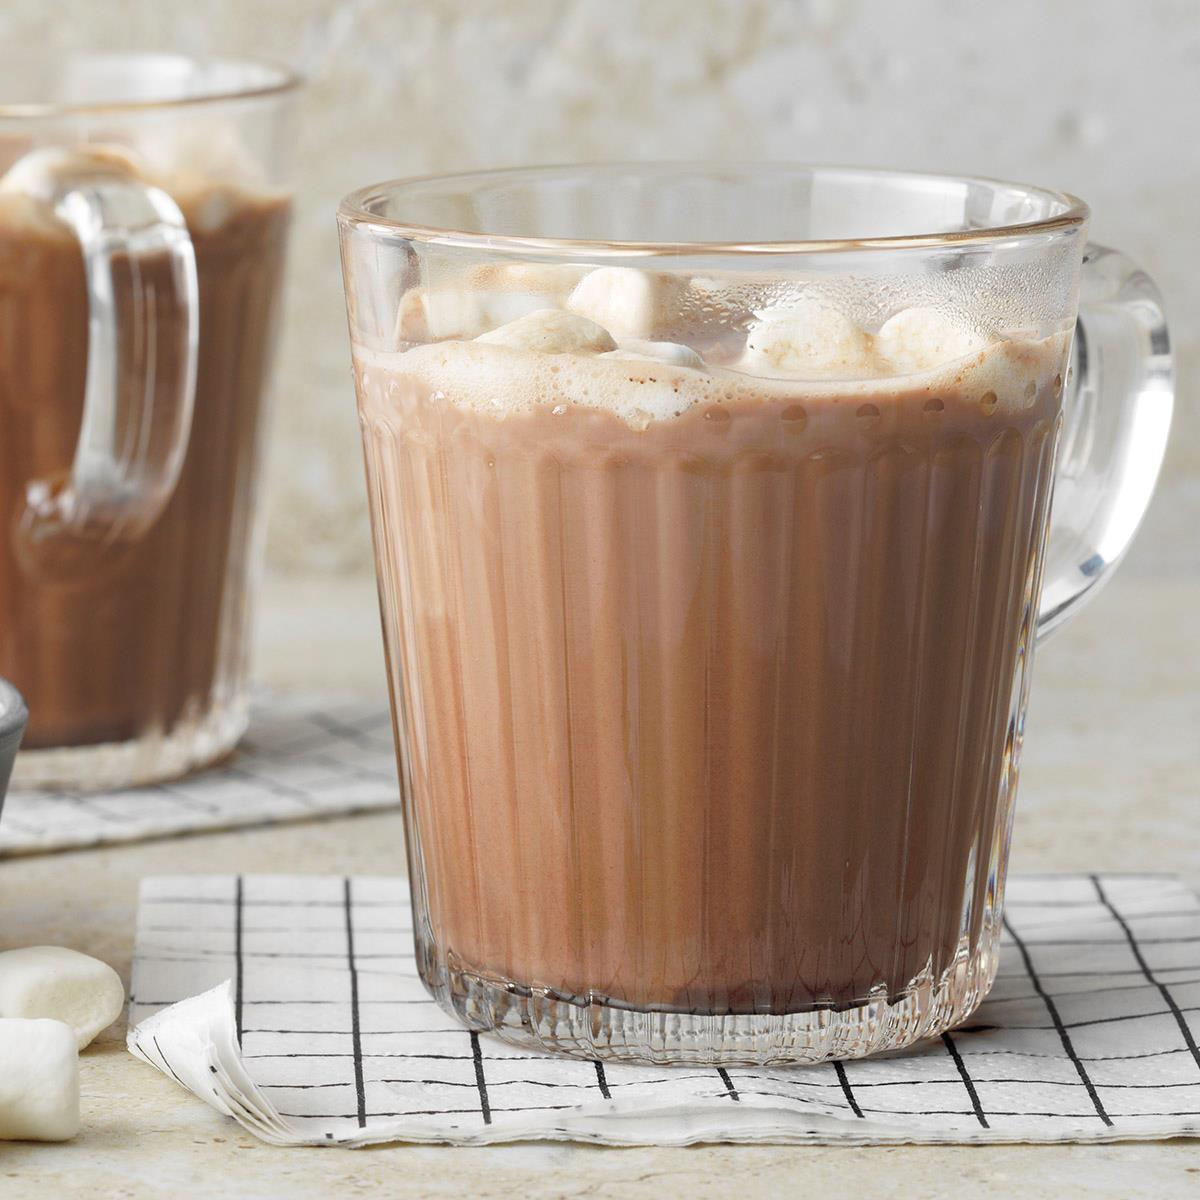 Homemade Hot chocolate, hot cocoa, cocoa news,